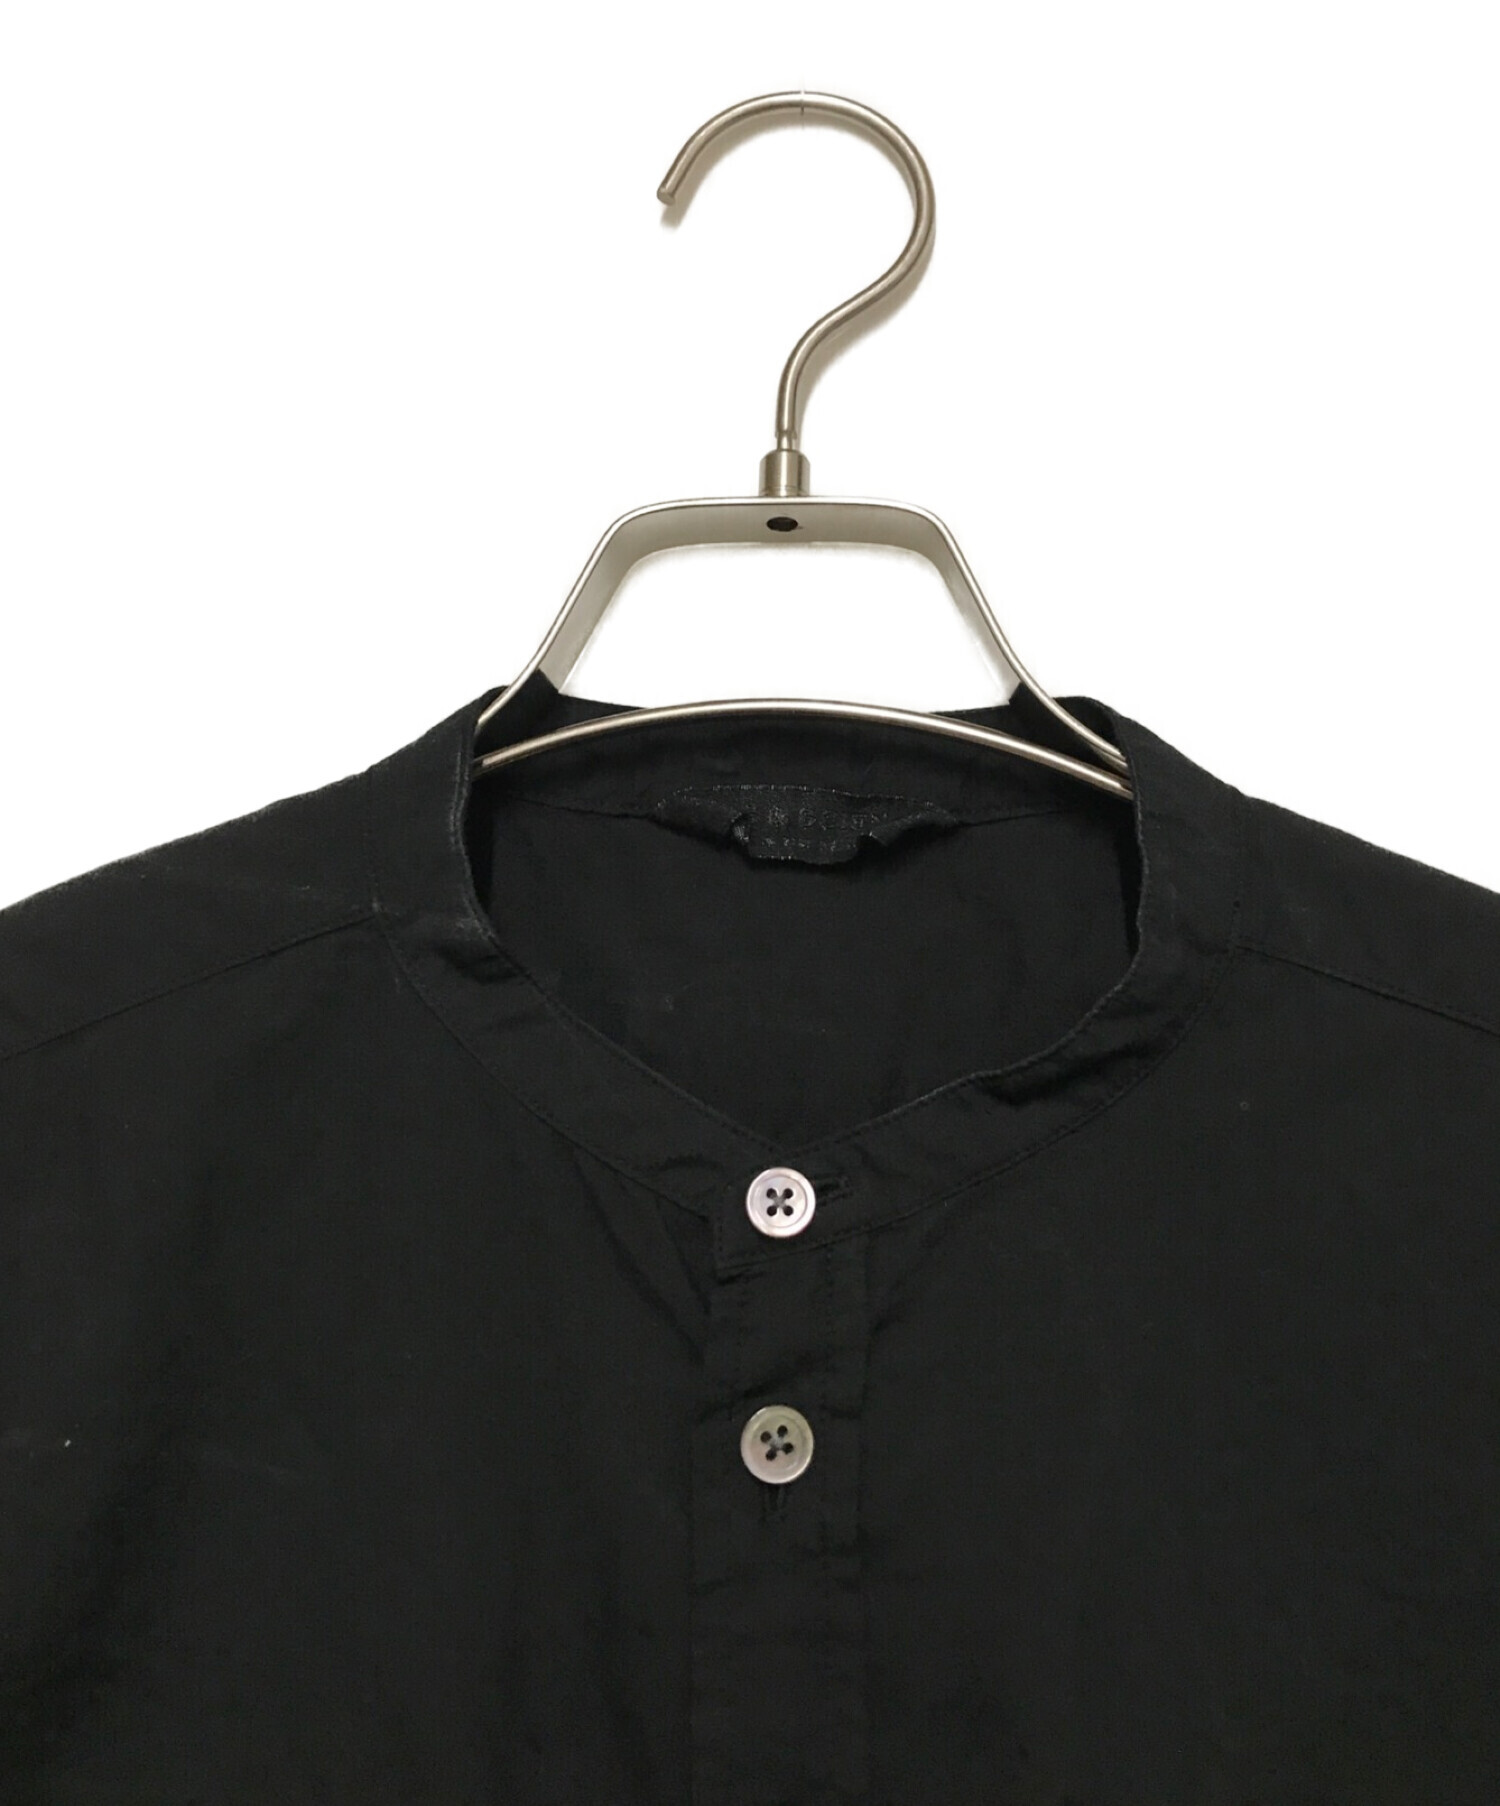 ARTS&SCIENCE (アーツアンドサイエンス) No collar fake shirt ブラック サイズ:1